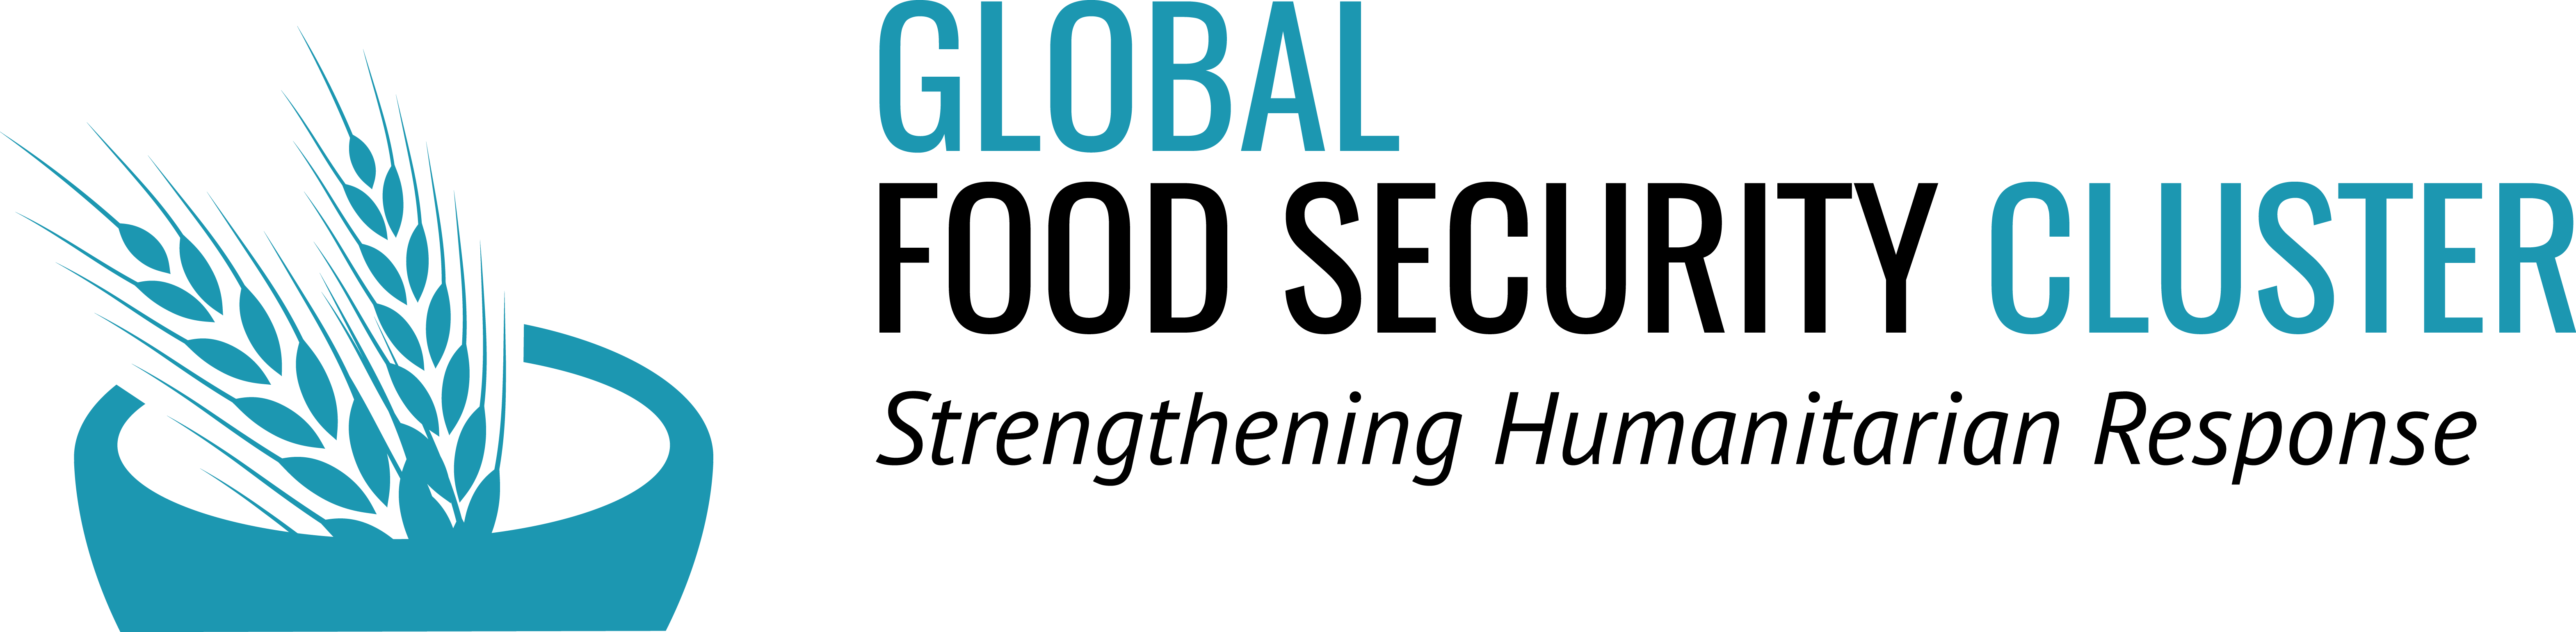 Global Food Security Cluster Logo